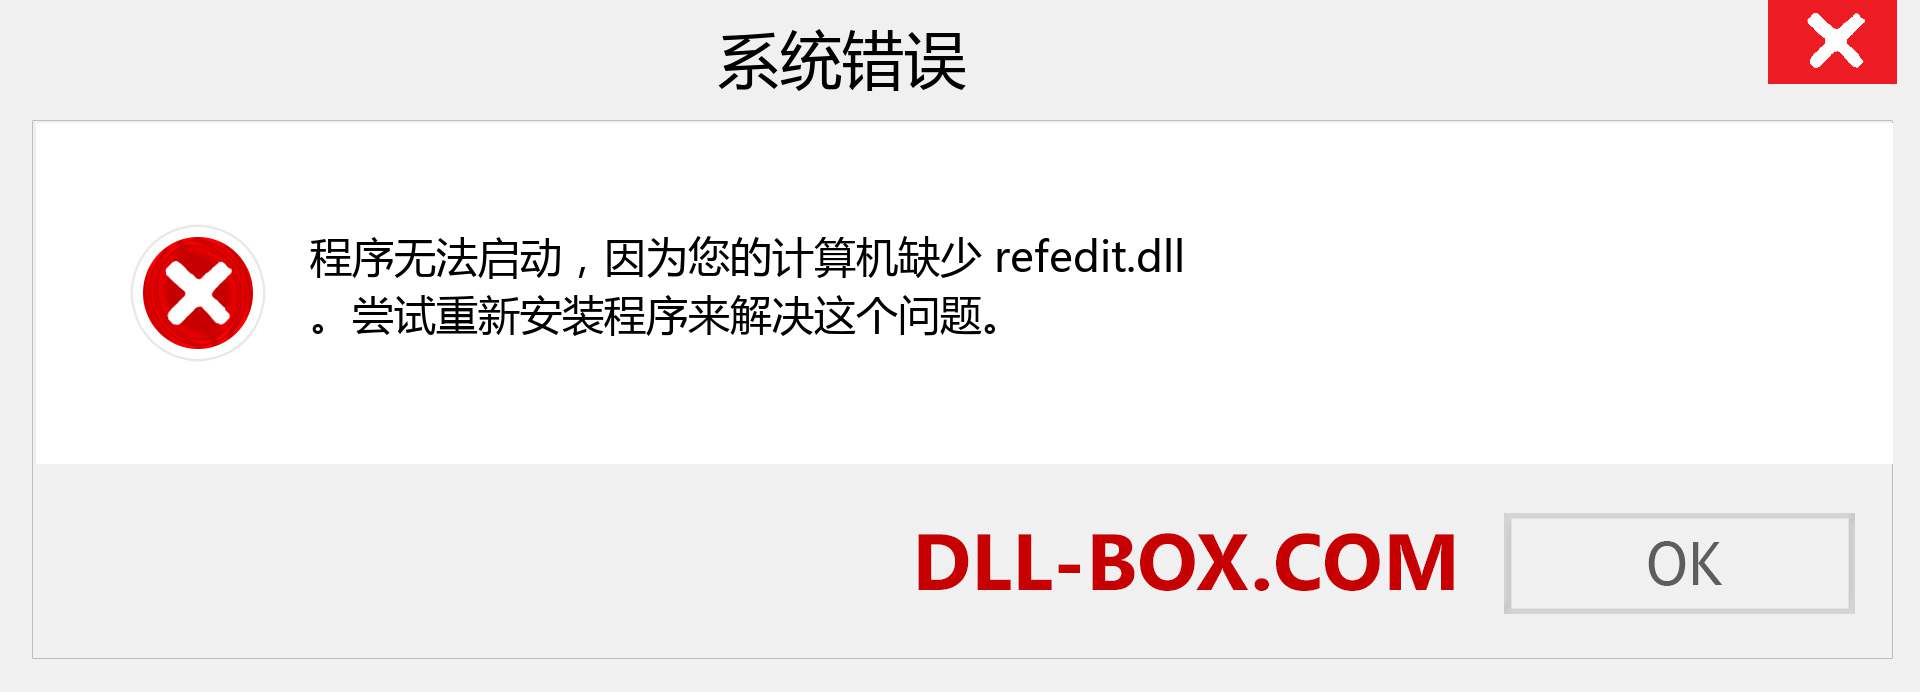 refedit.dll 文件丢失？。 适用于 Windows 7、8、10 的下载 - 修复 Windows、照片、图像上的 refedit dll 丢失错误